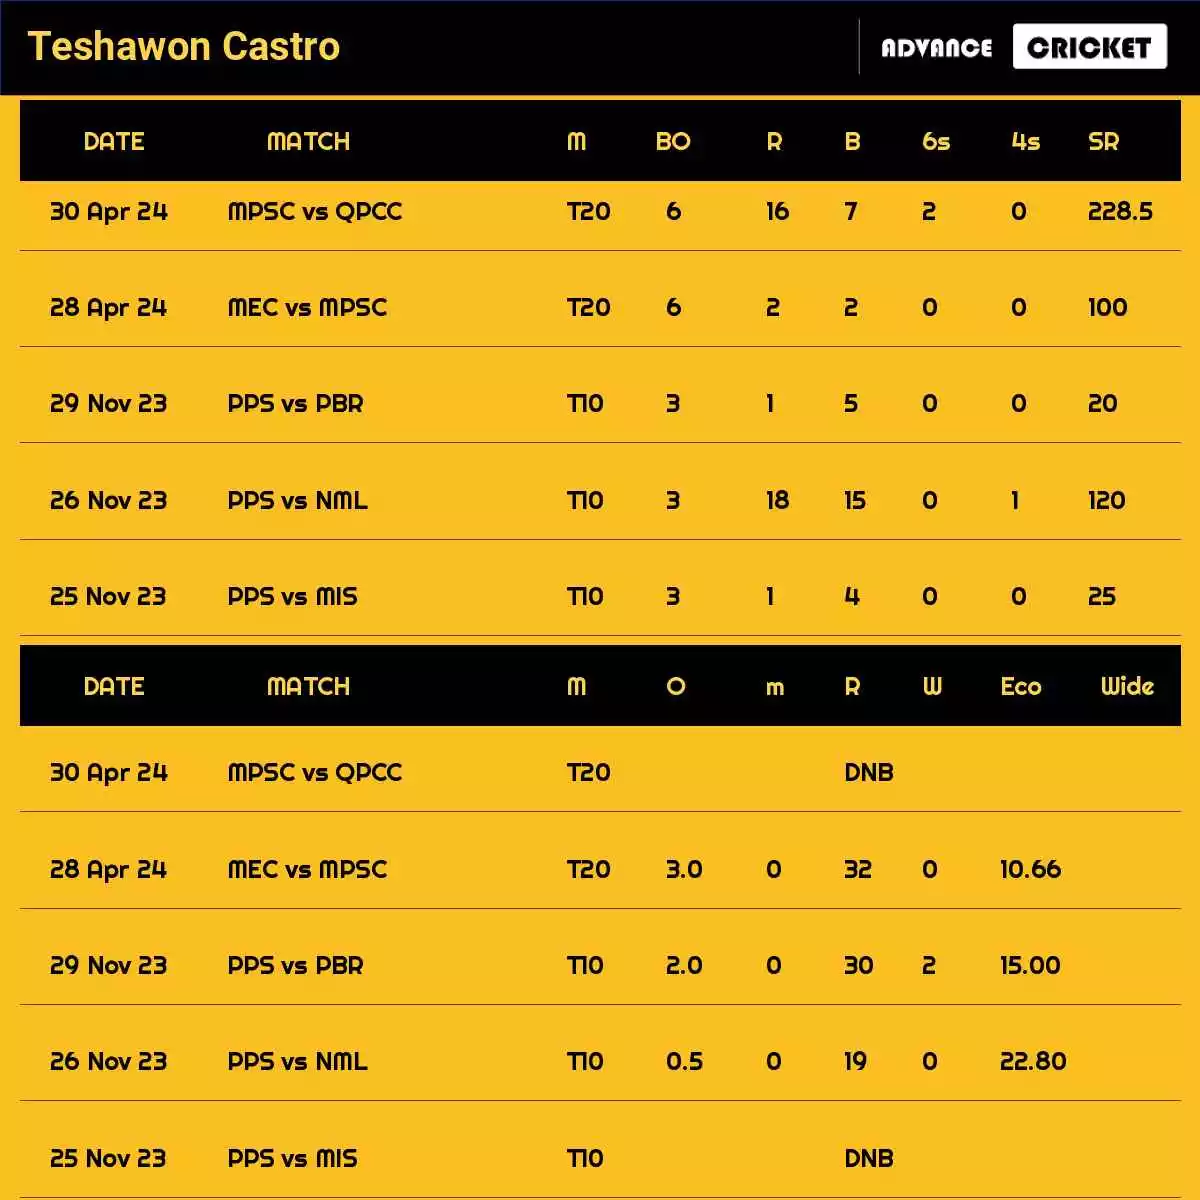 Teshawon Castro Recent Matches Details Date Wise